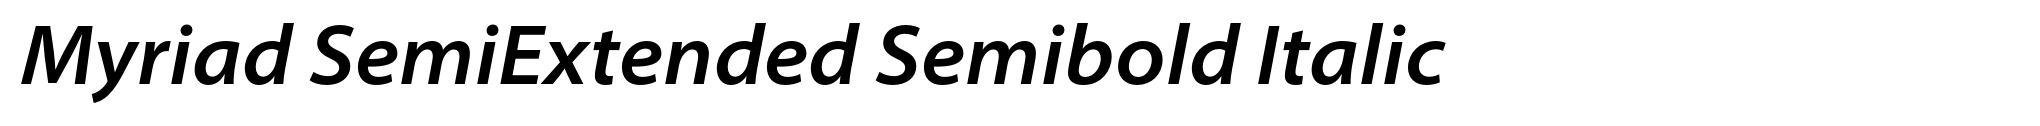 Myriad SemiExtended Semibold Italic image